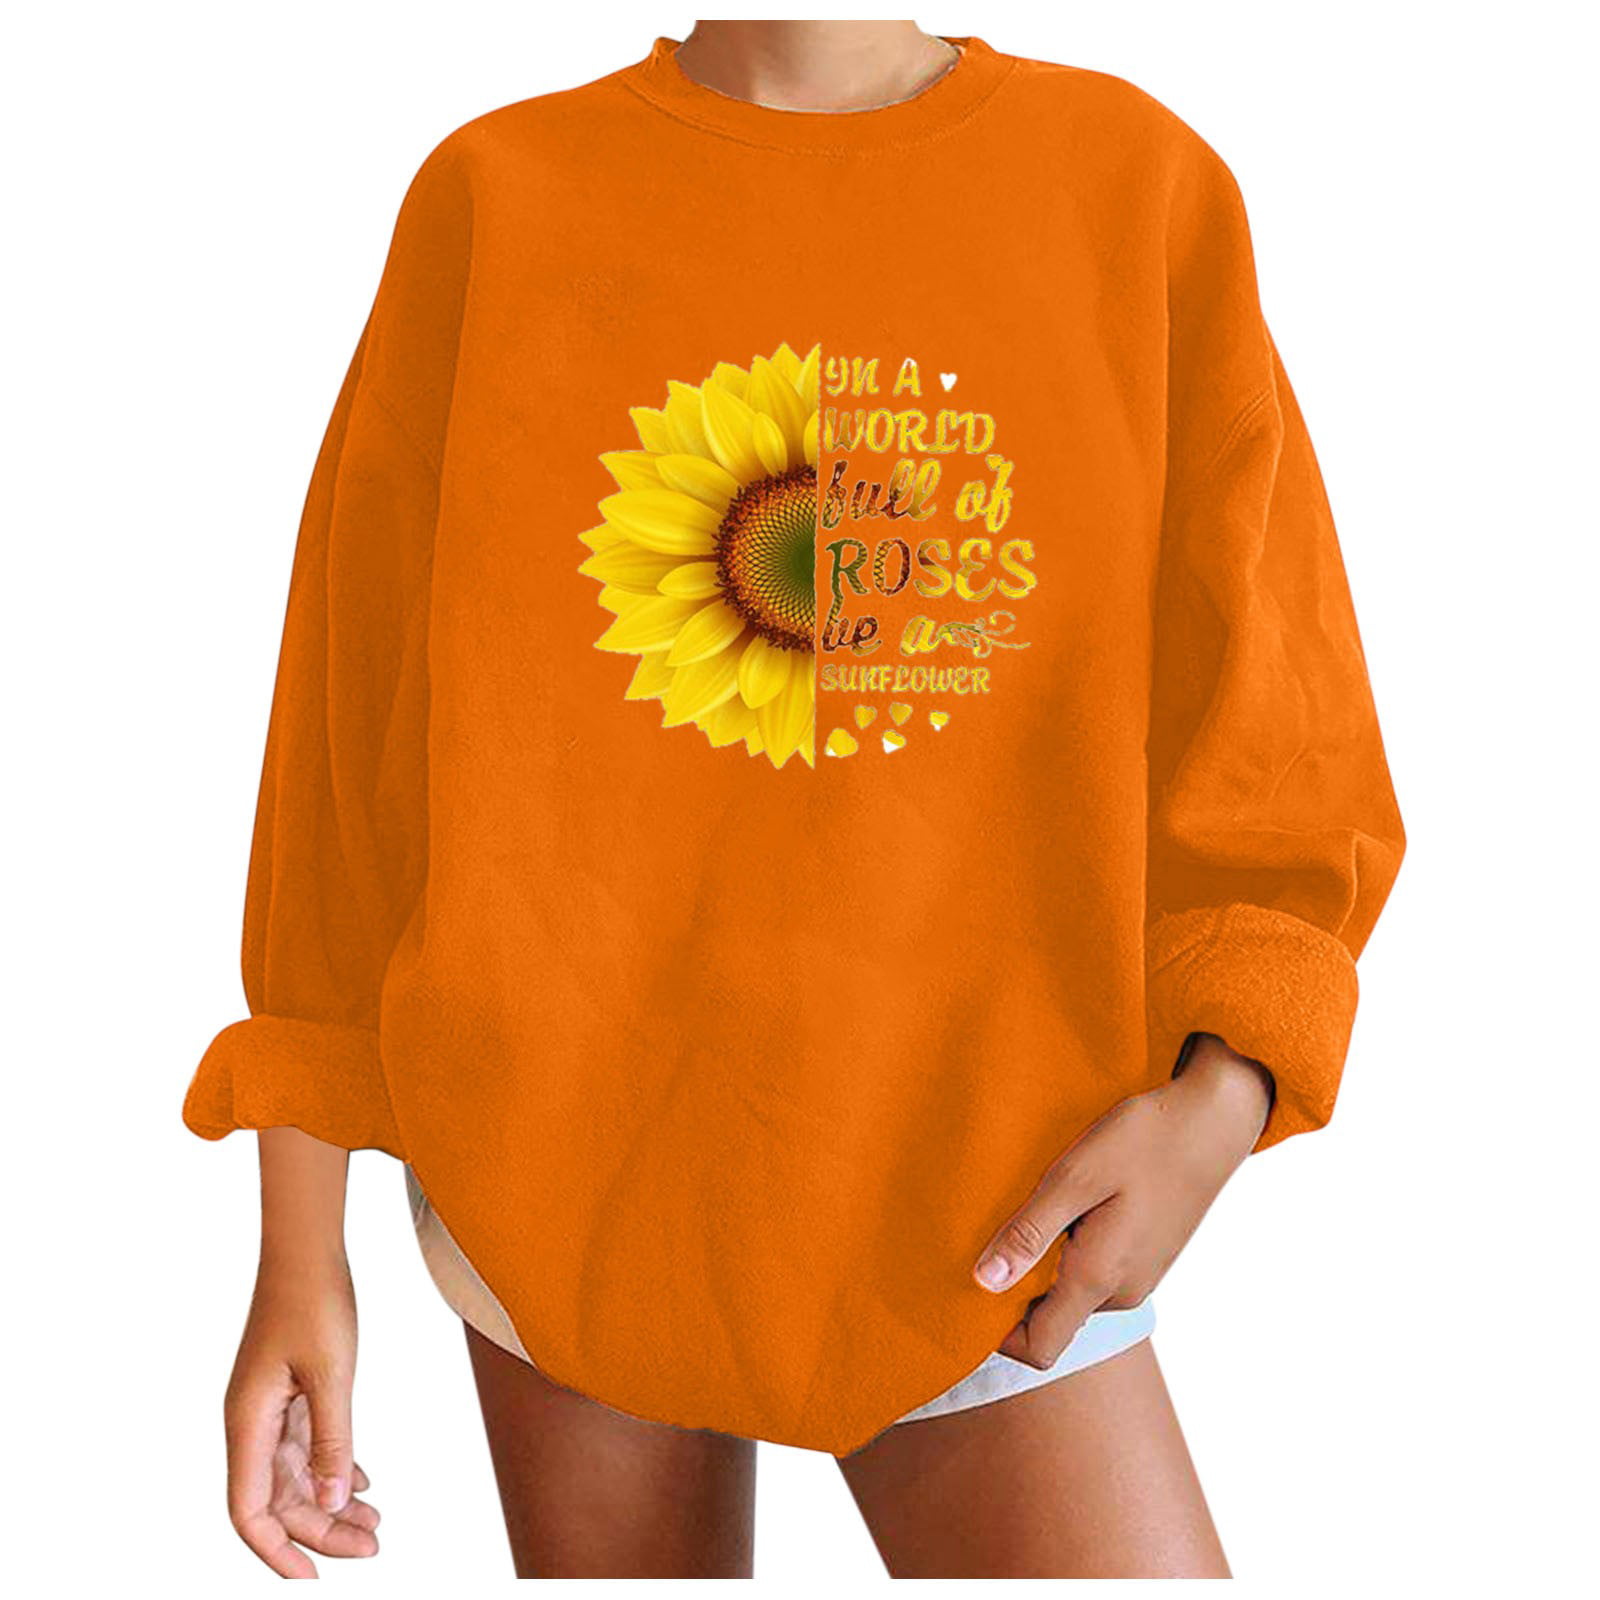 ZMHEGW Hoodies for Women Graphic Casual Printed Sweatshirt Top Long ...